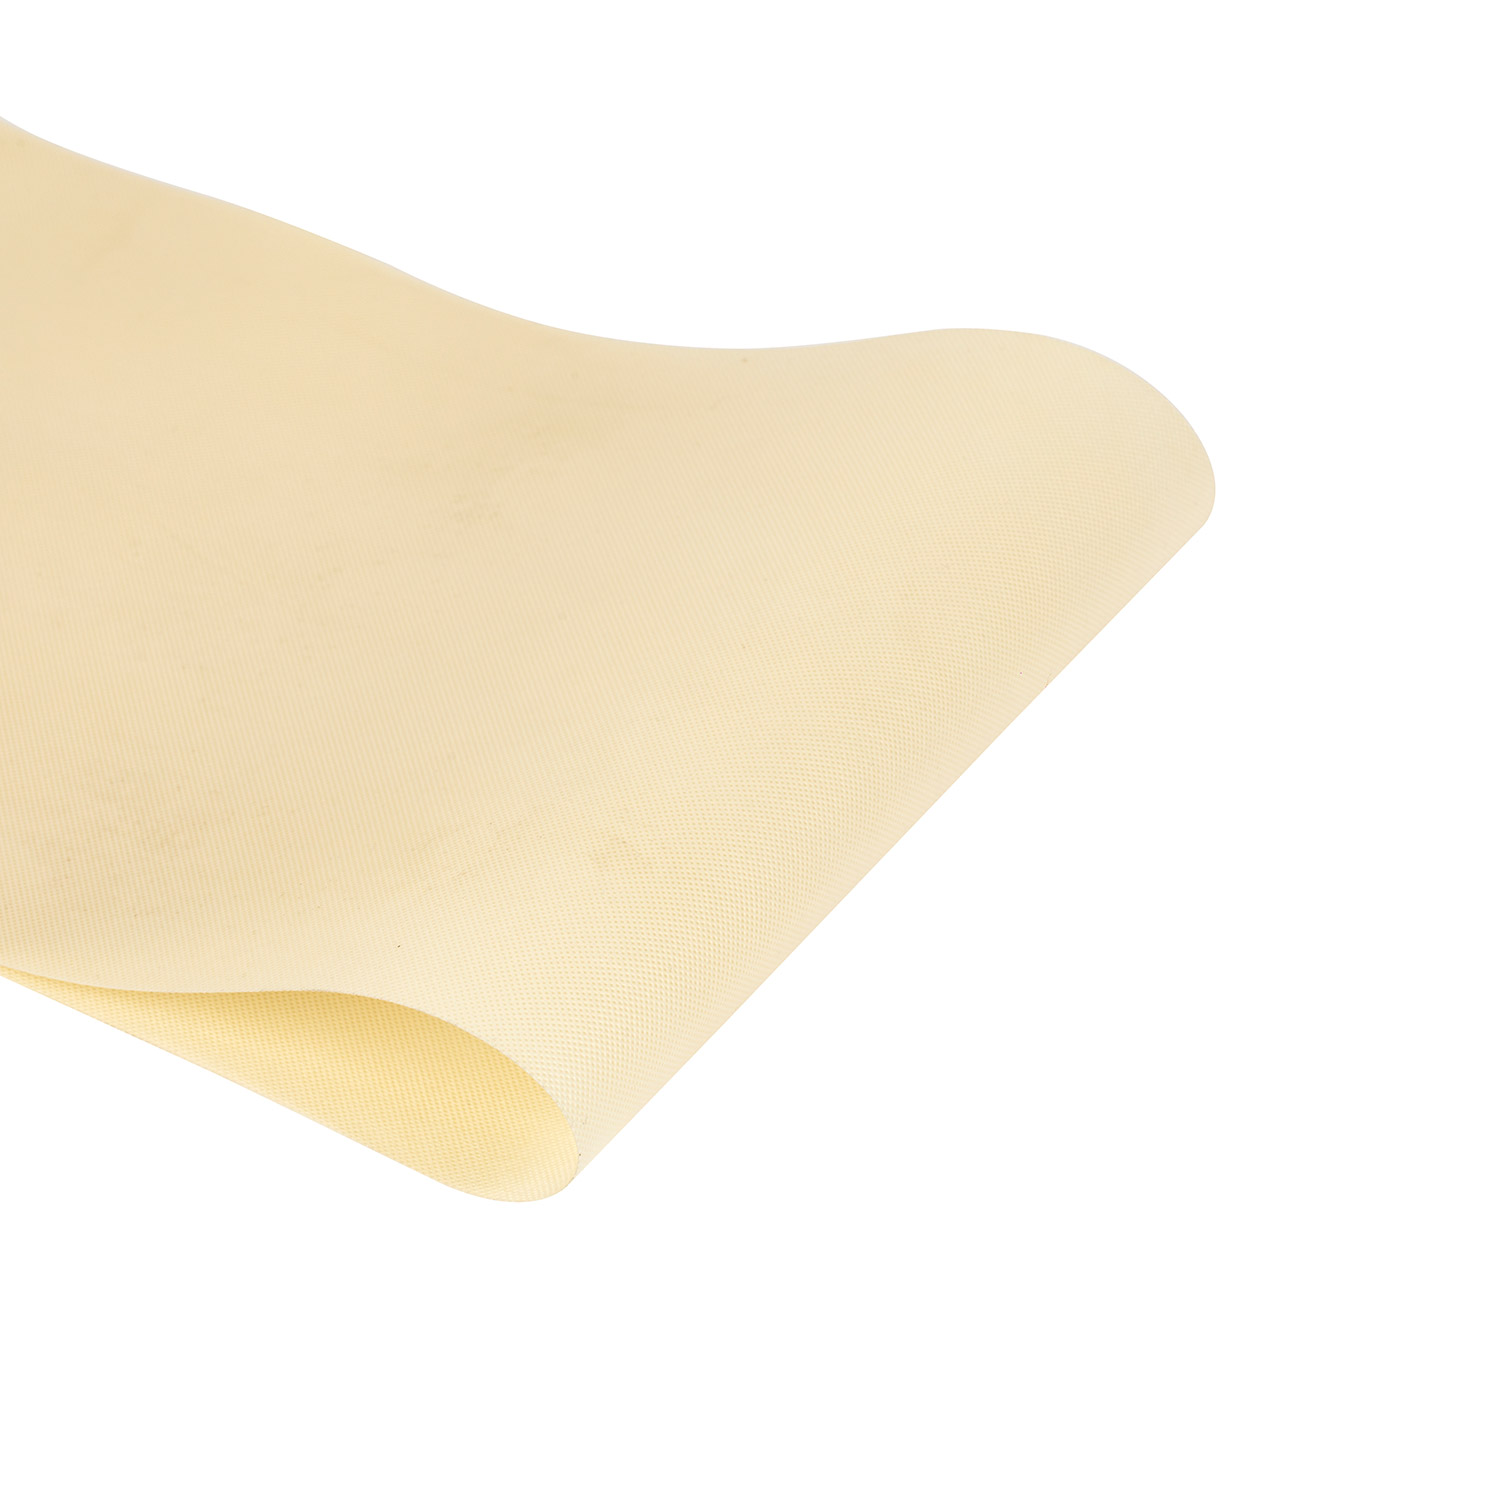 Tessuto non tessuto non tessuto a spunbonded impermeabile morbido per materasso